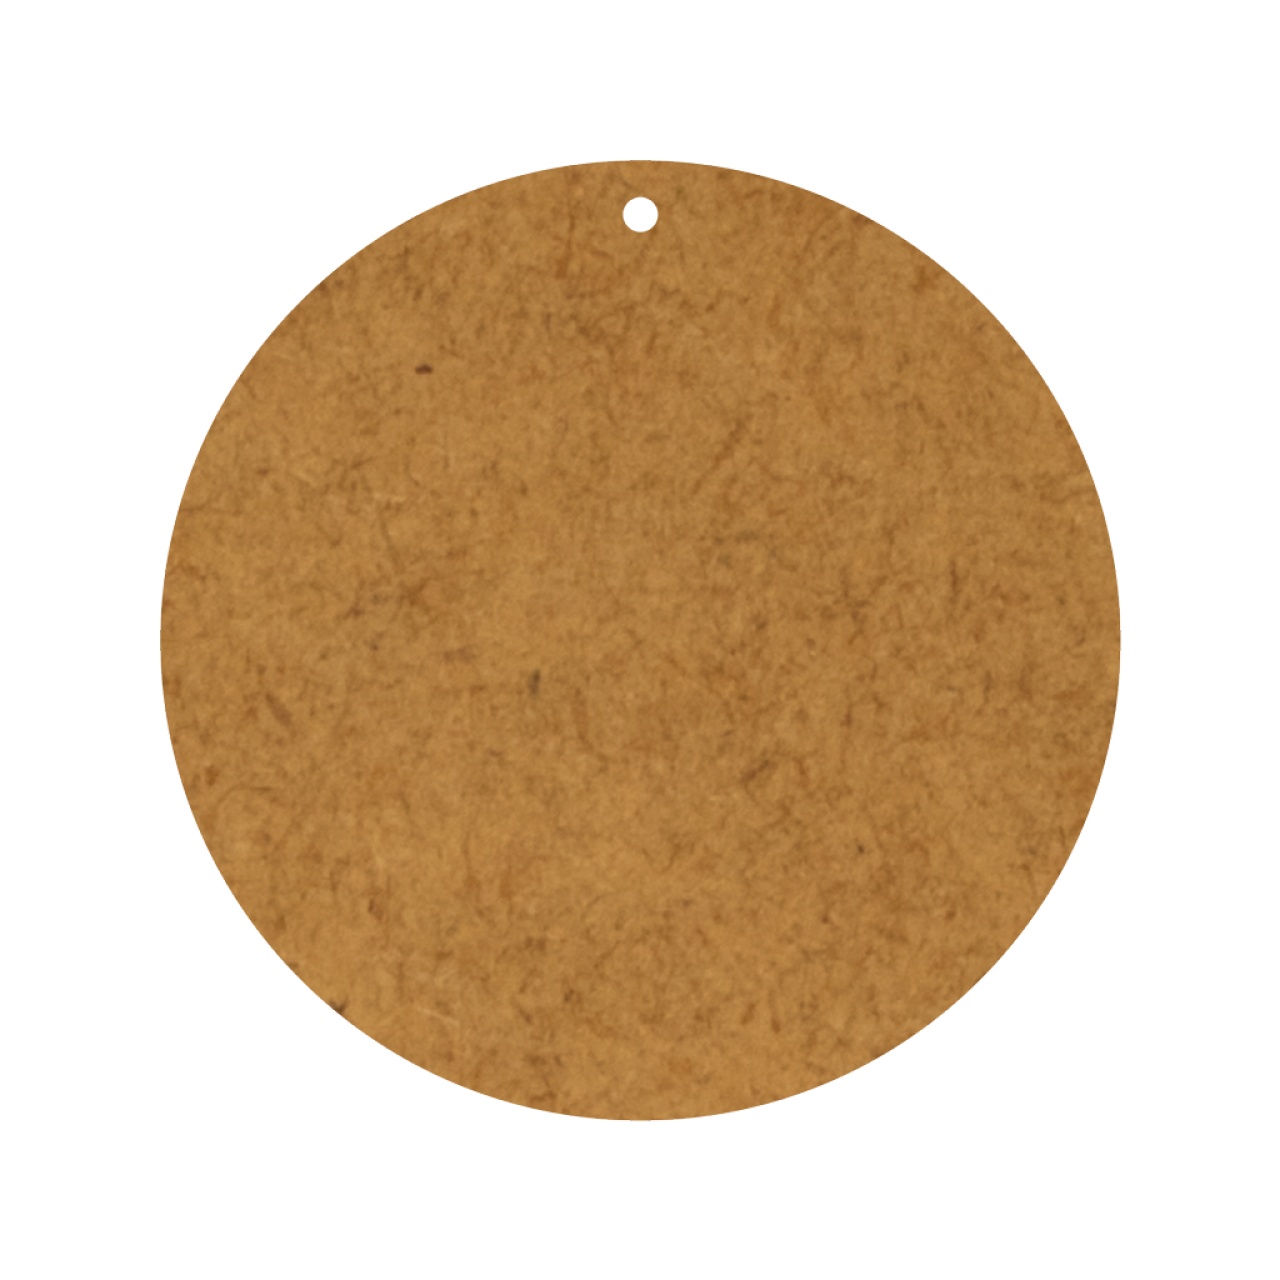 Bază rotundă, Ø5,5 cm, HDF :: Ø5,5 cm